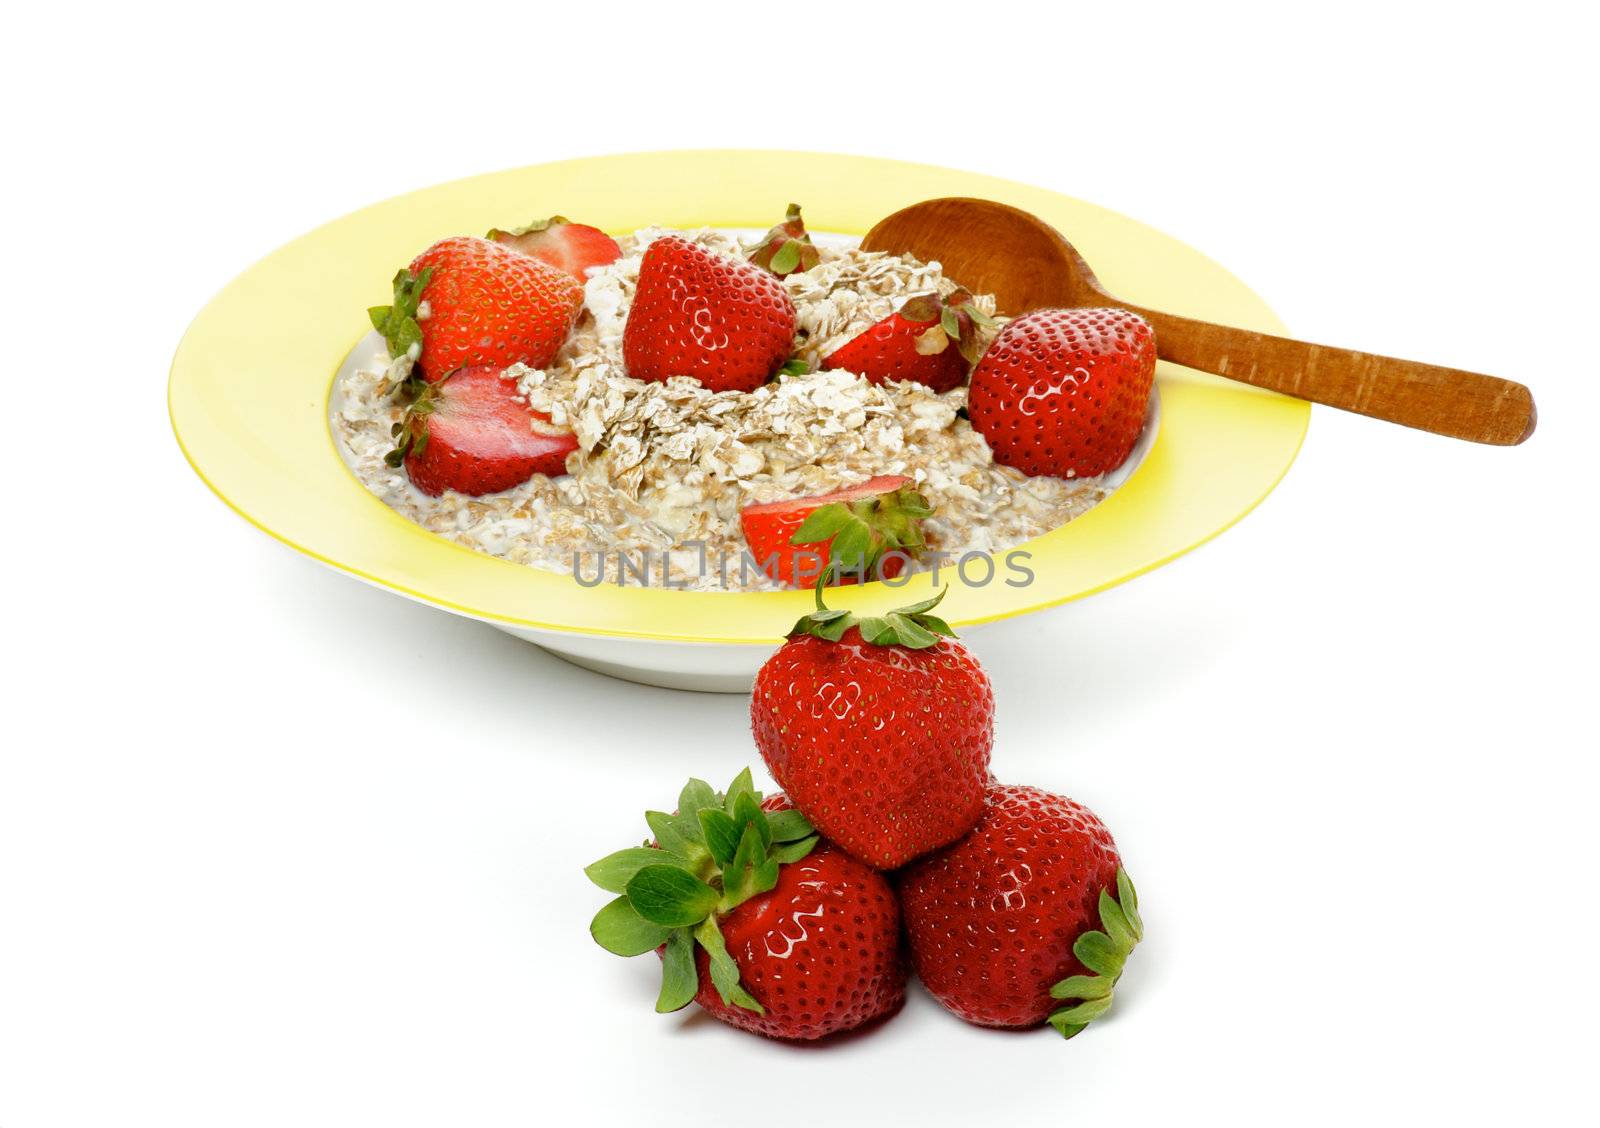 Healthy Breakfast and Strawberries by zhekos